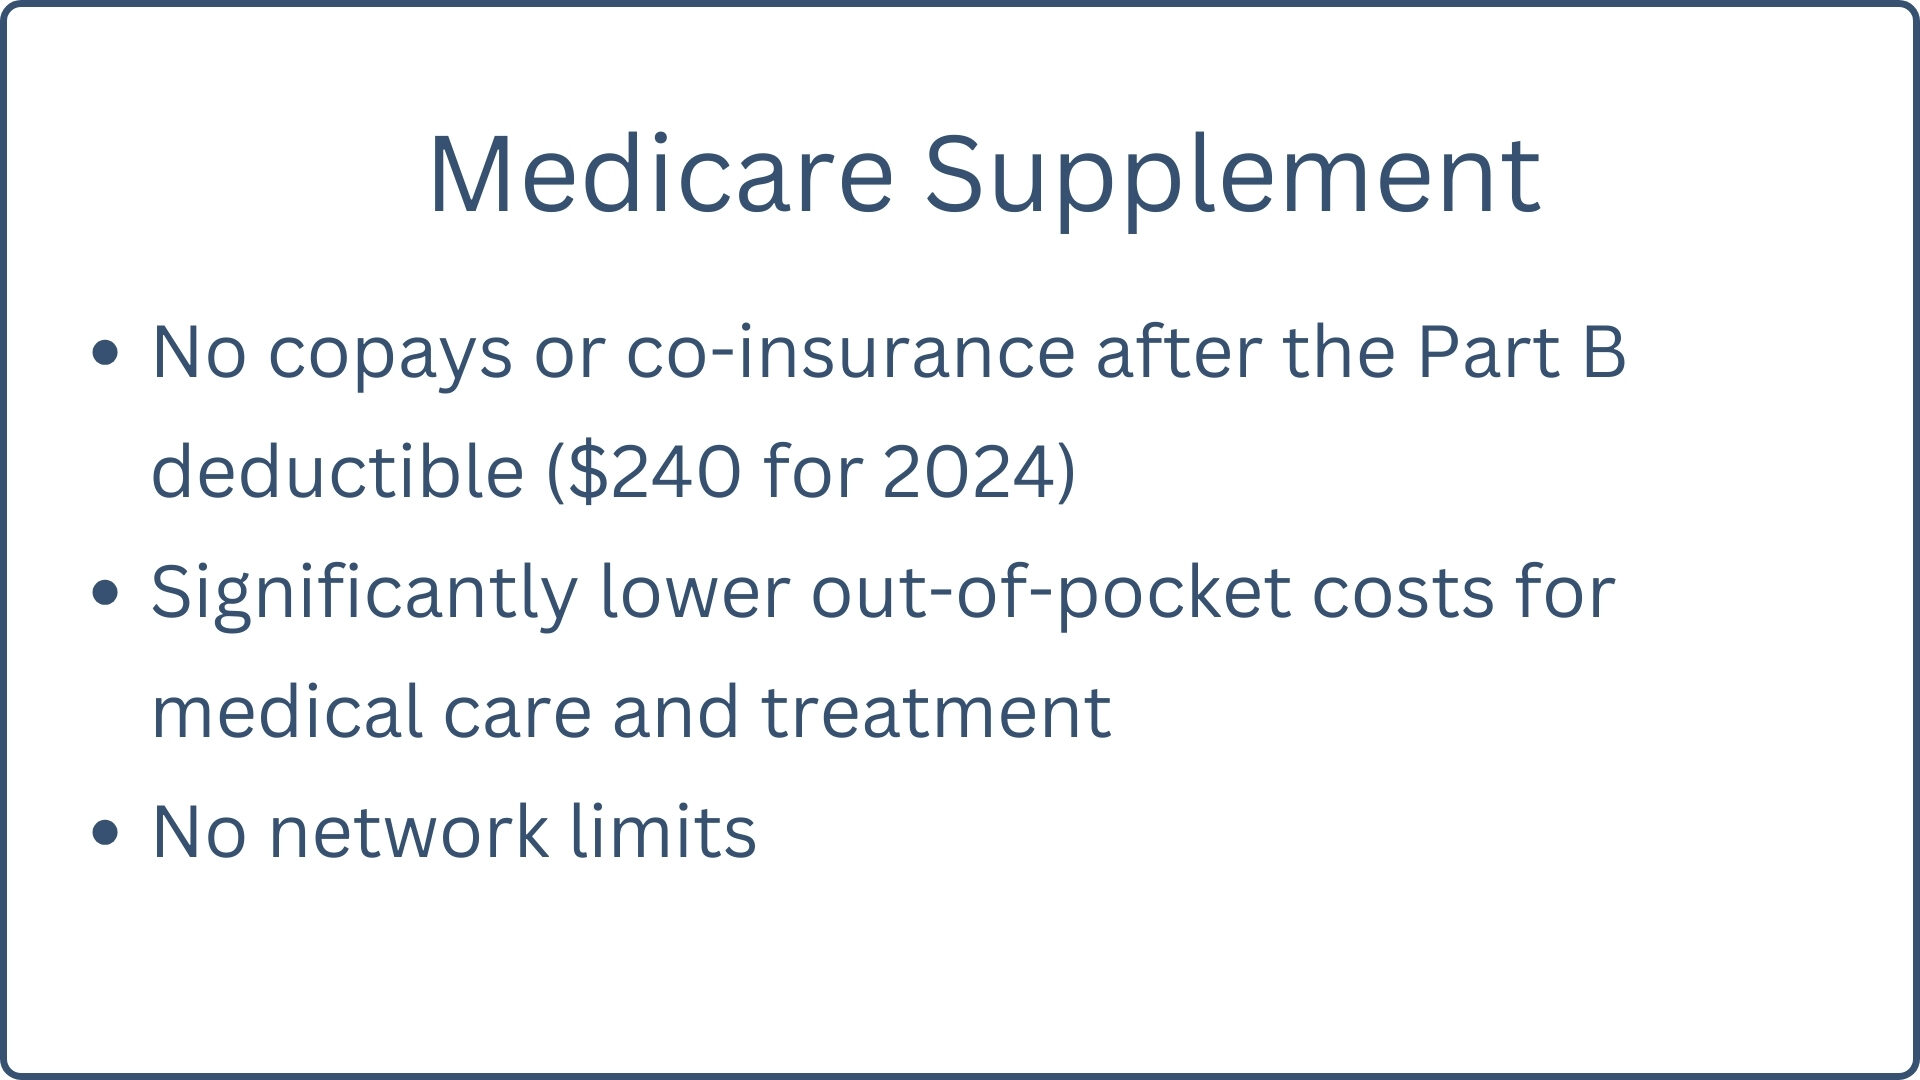 Medicare Supplement Benefits